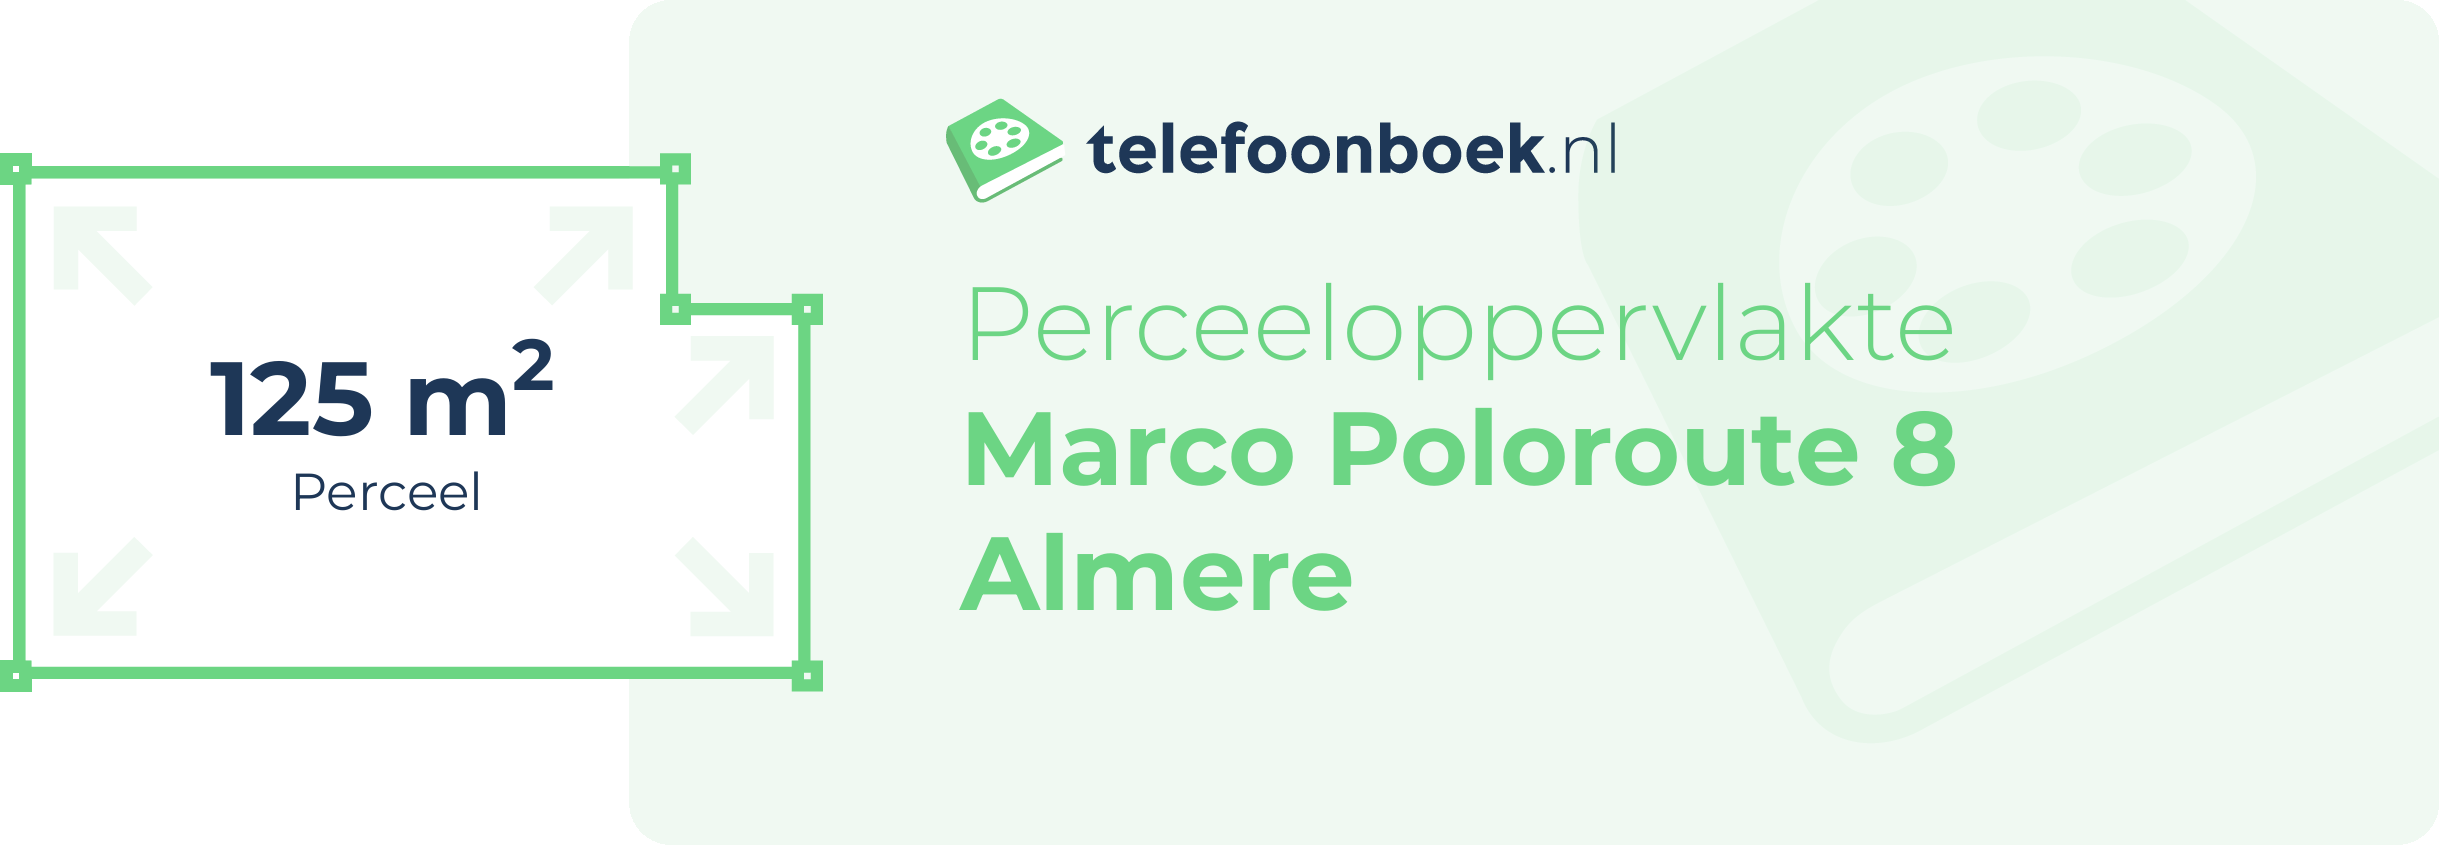 Perceeloppervlakte Marco Poloroute 8 Almere